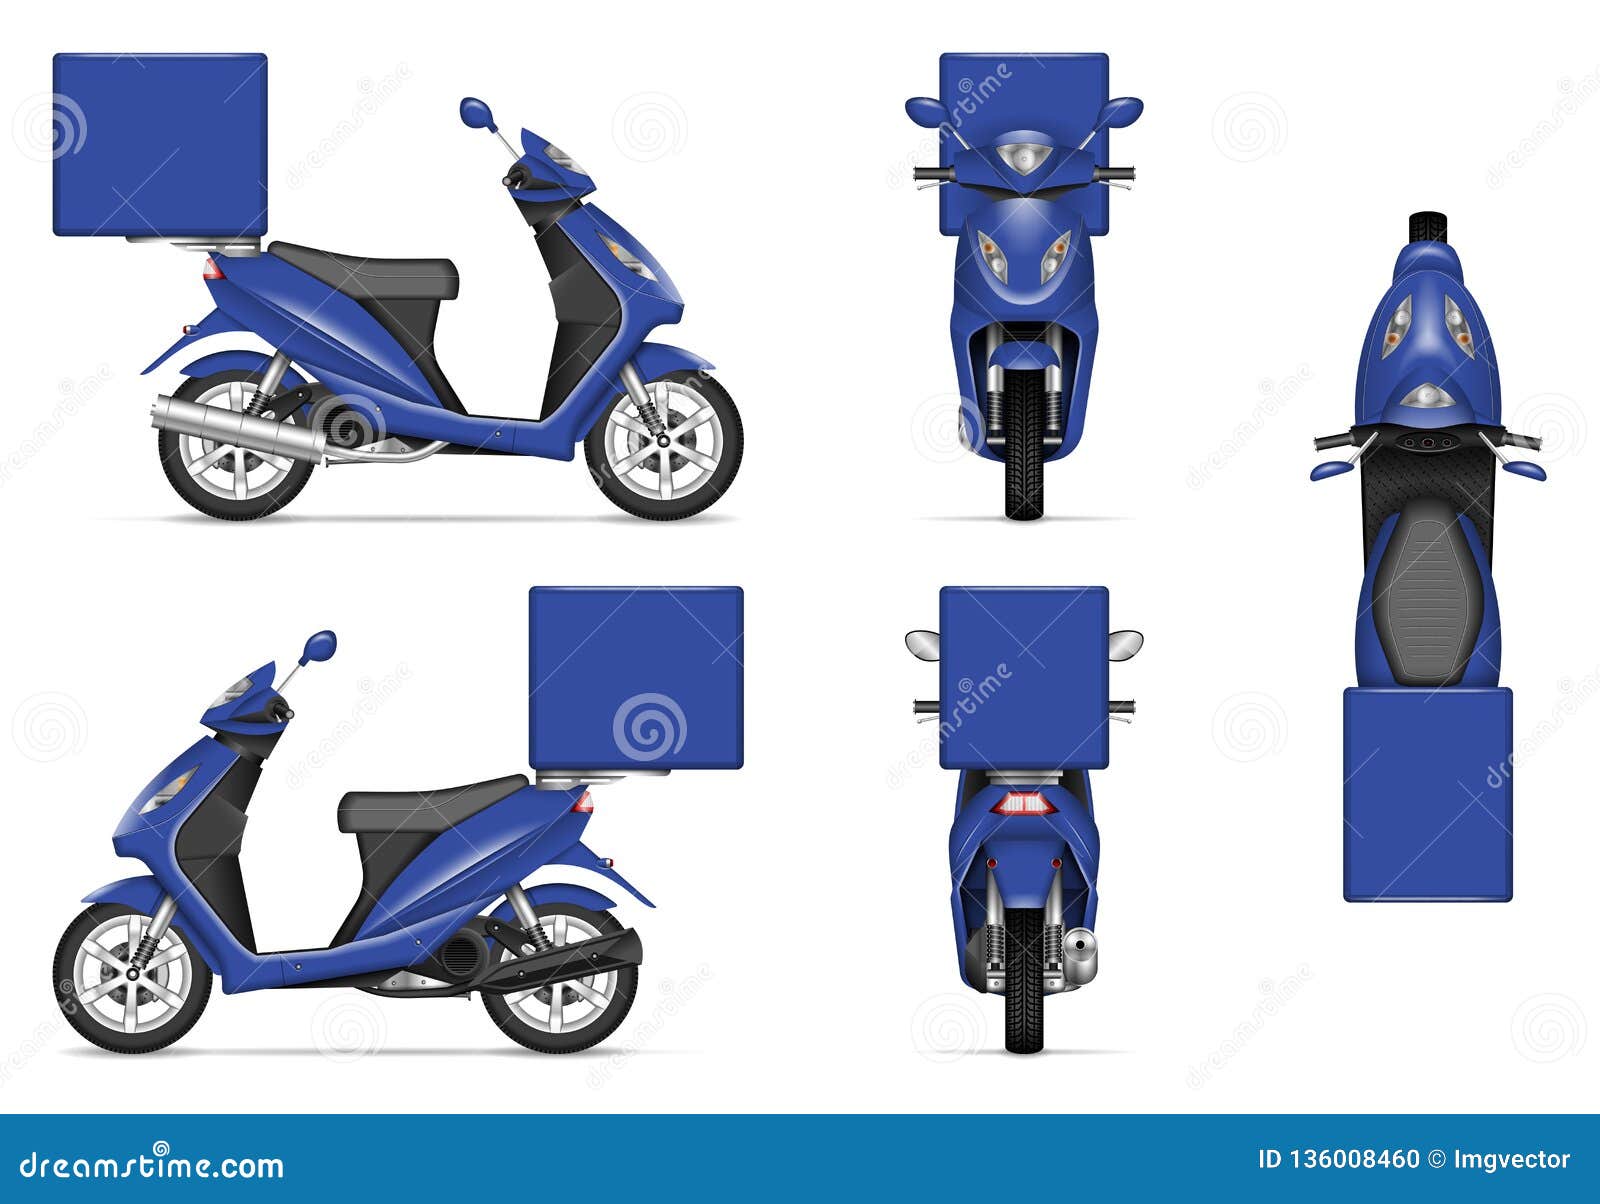 Download Realistic Blue Motorcycle Vector Mock-up Stock Vector - Illustration of branding, mock: 136008460